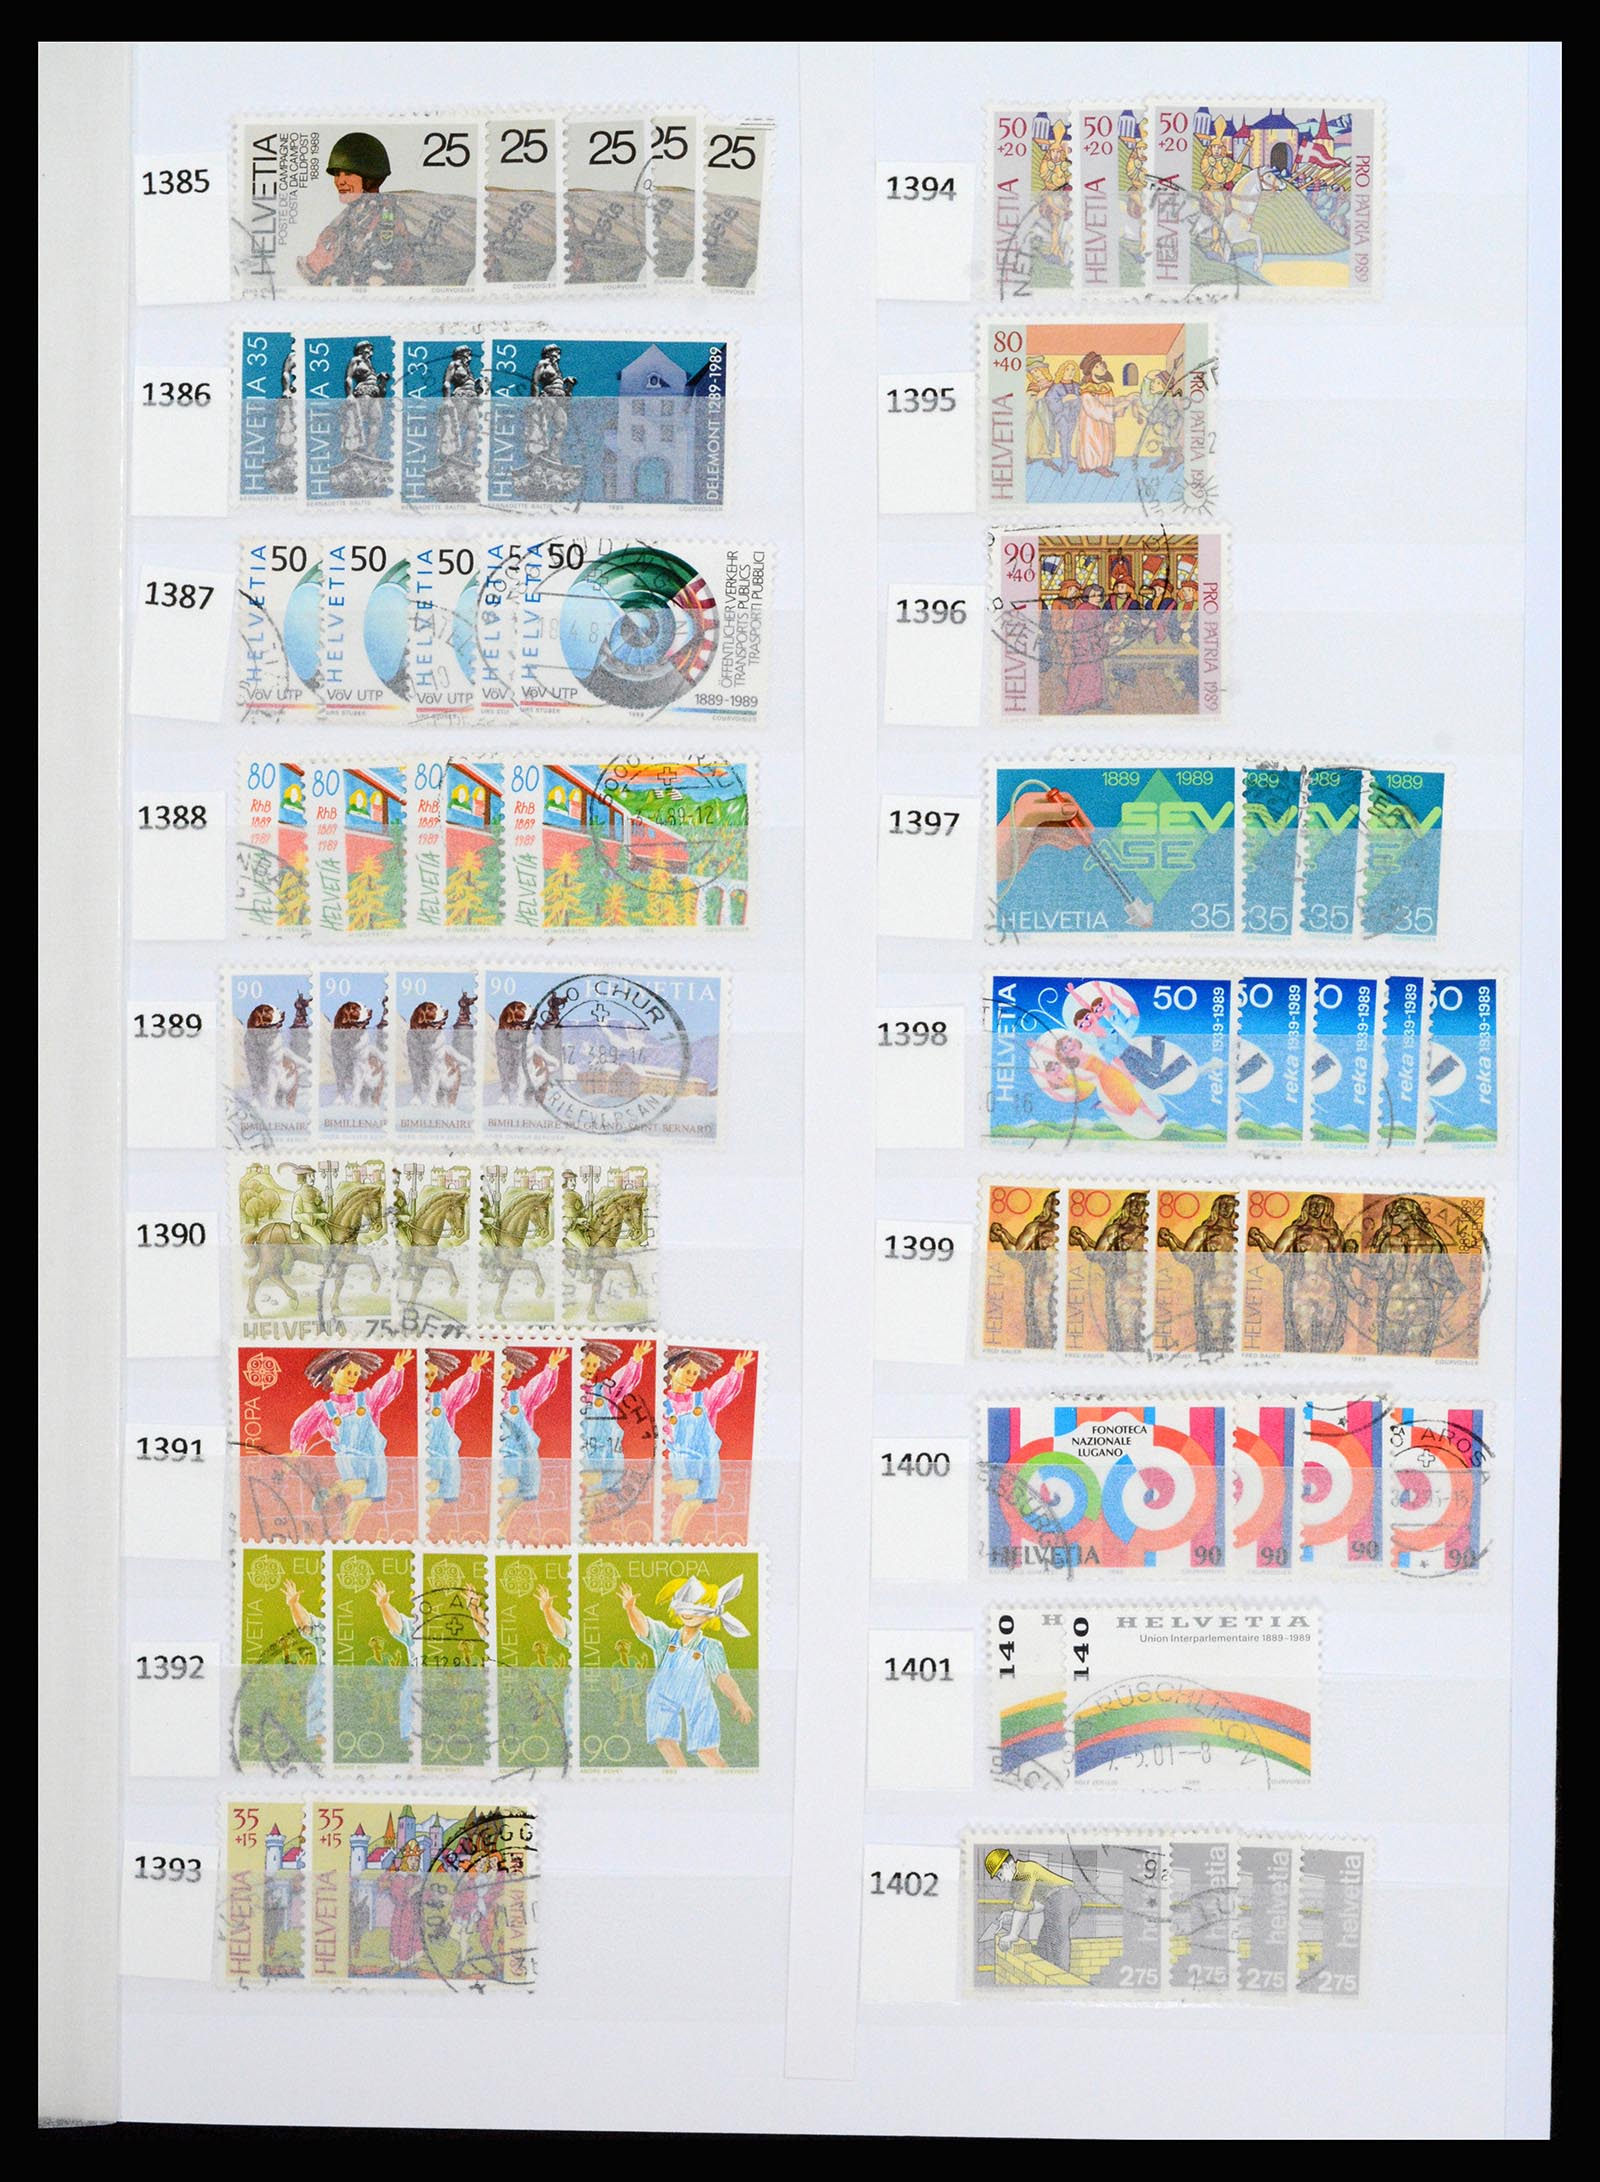 37252 078 - Stamp collection 37252 Switzerland 1900-2011.